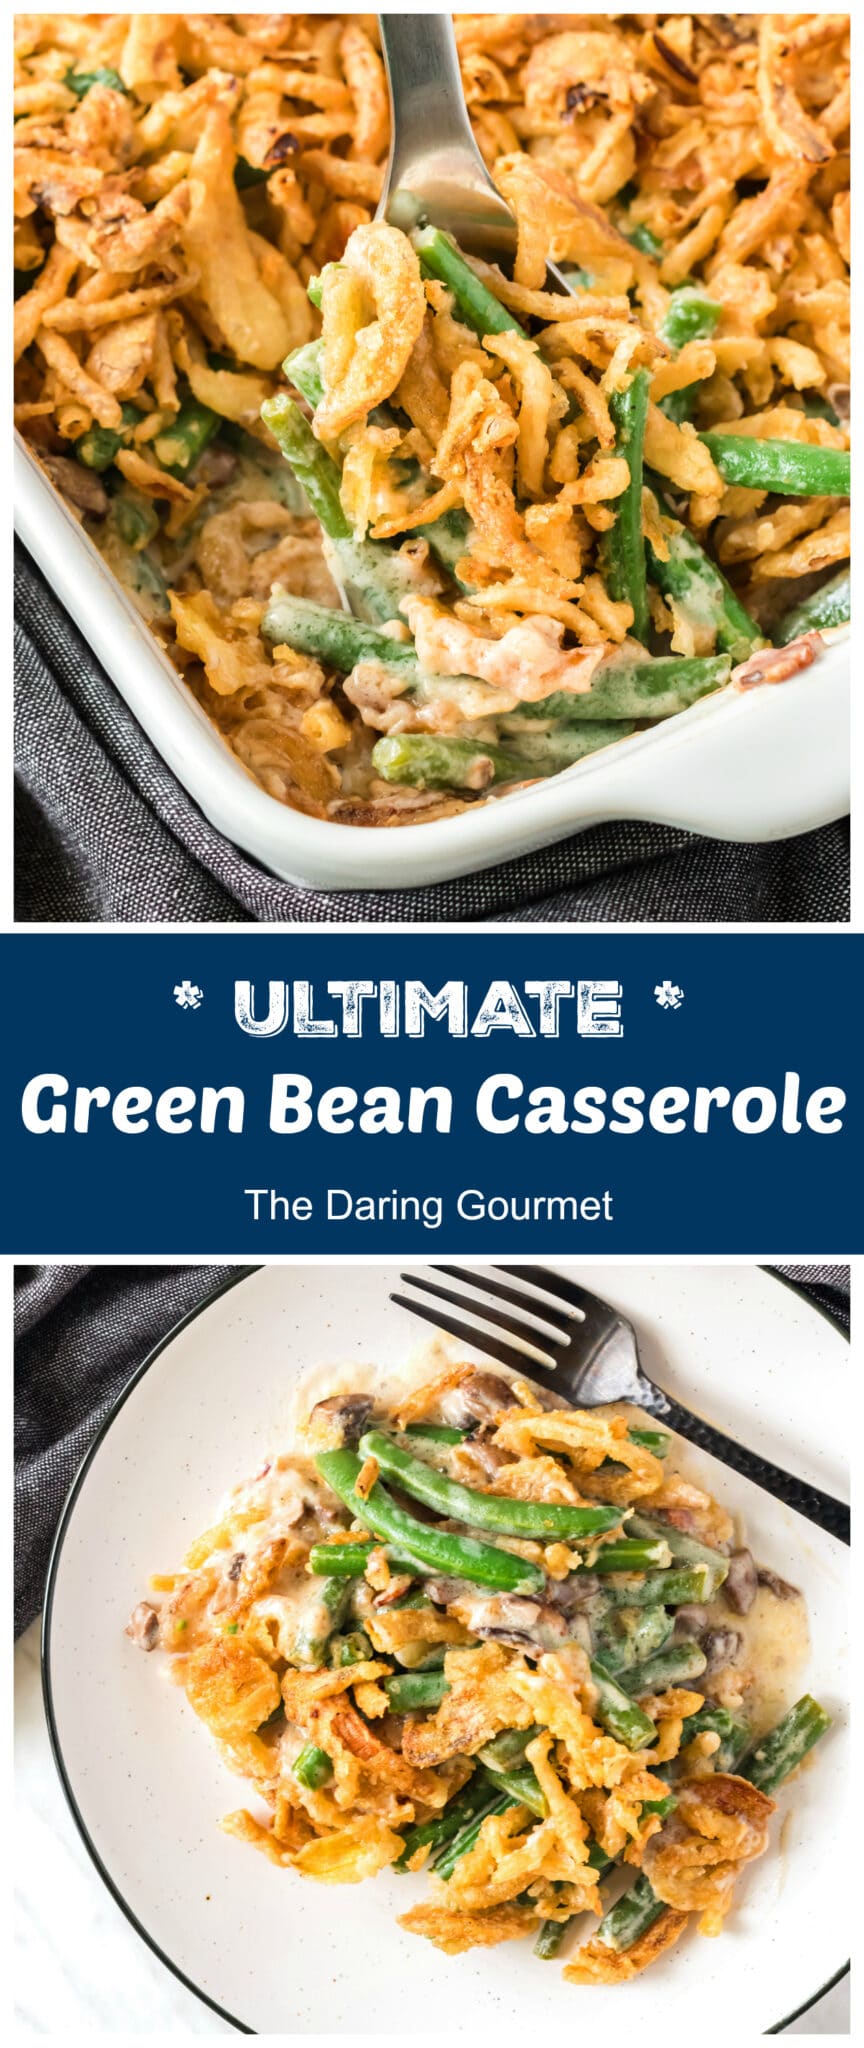 green bean casserole recipe best ultimate from scratch bacon mushrooms cream cheddar cheese daring gourmet